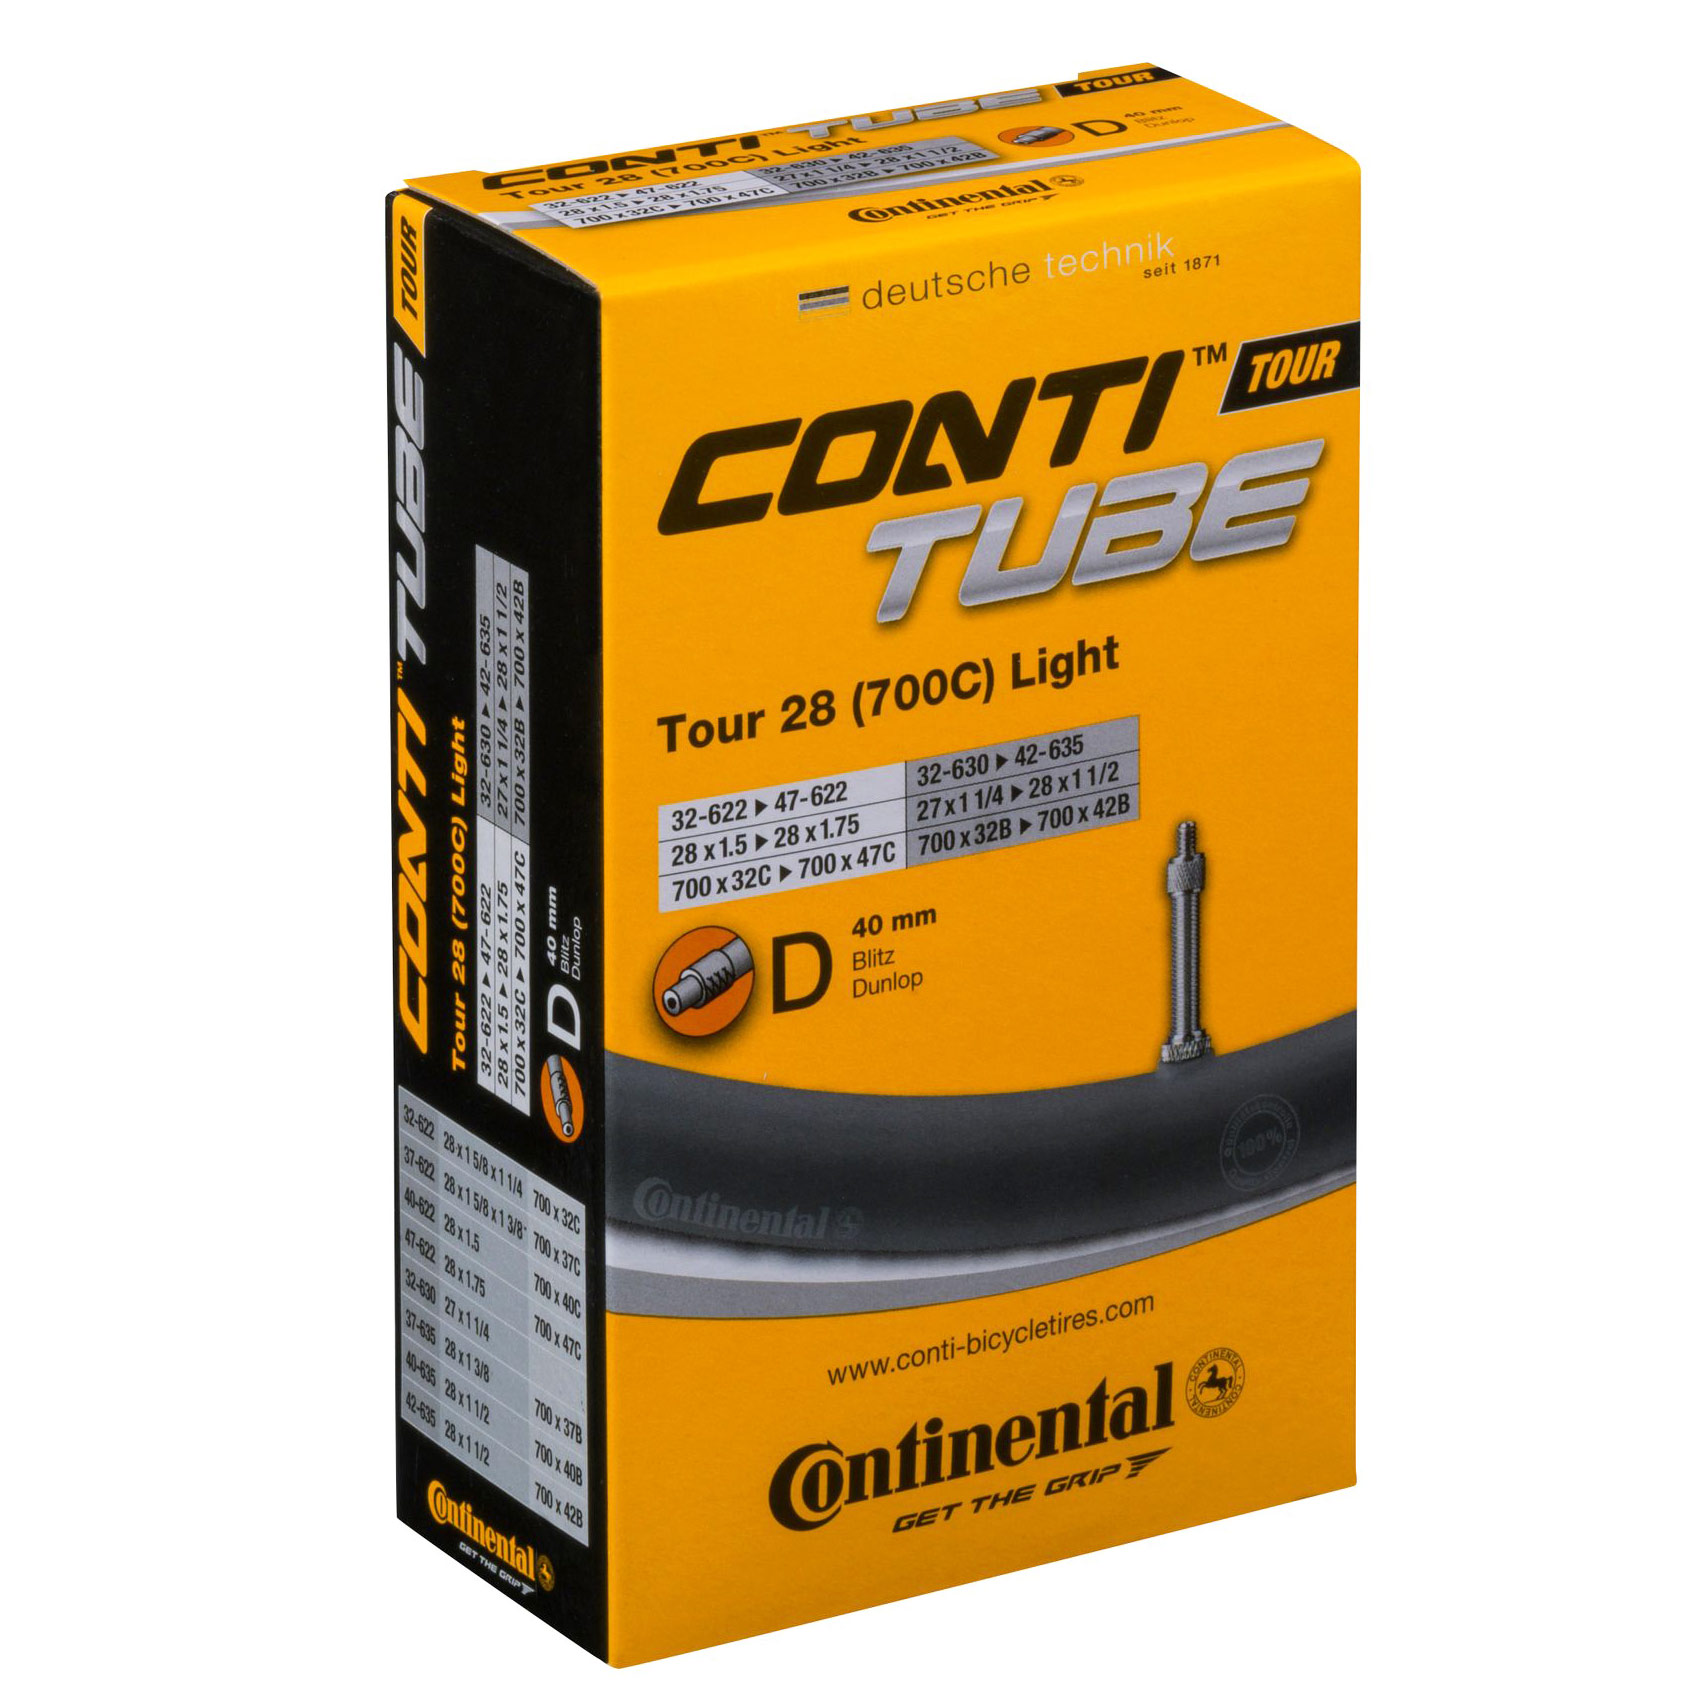 Productfoto van Continental Tour 28 Light Tube